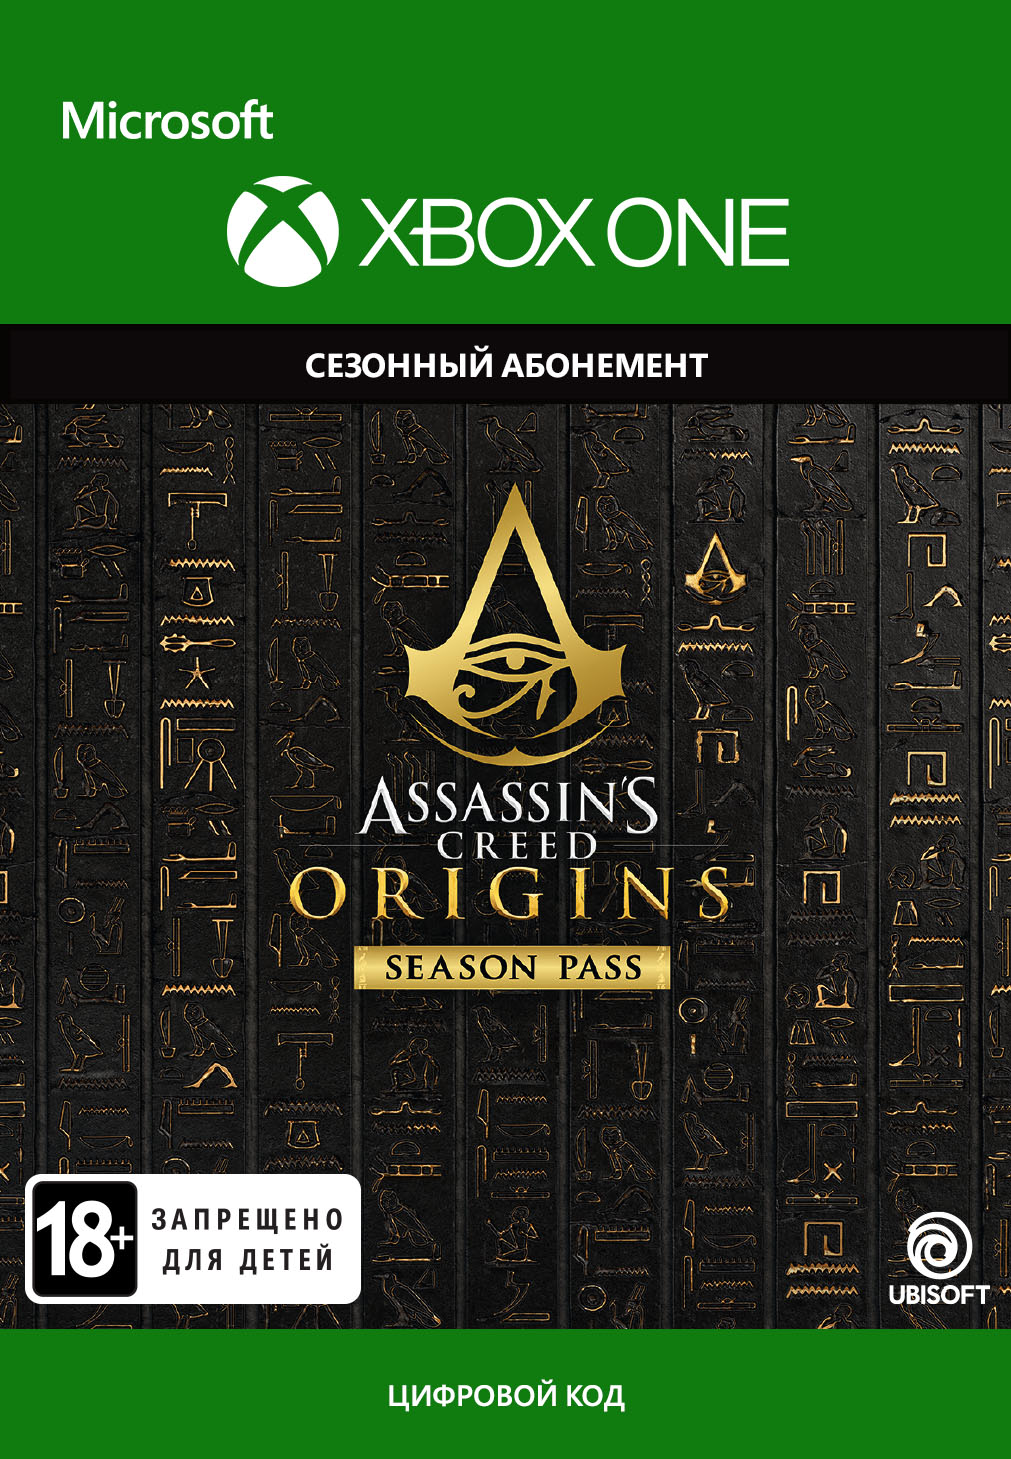 Фото - Assassin's Creed: Истоки (Origins). Season Pass [Xbox One, Цифровая версия] (Цифровая версия) frostpunk season pass [pc цифровая версия] цифровая версия